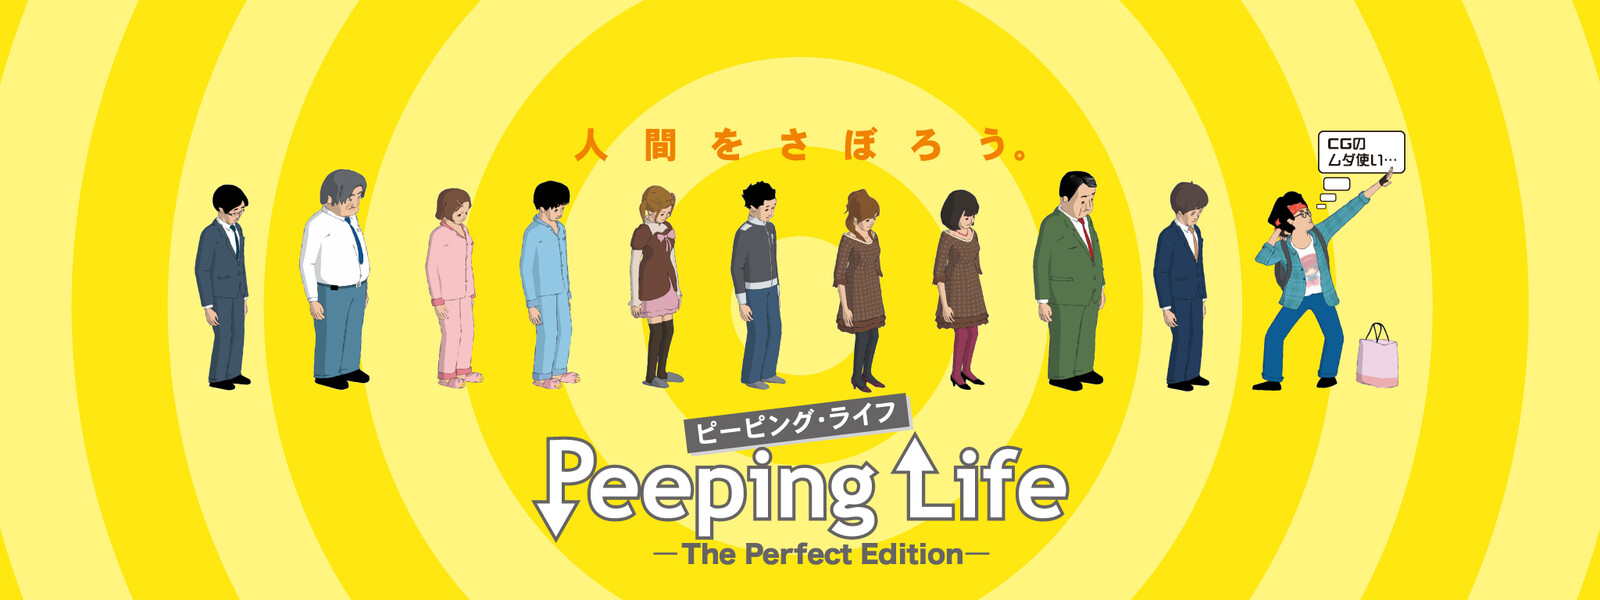 Peeping Life (ピーピング･ライフ) -The Perfect Edition- イエロー盤の動画 - Peeping Life (ピーピング・ライフ) -The Perfect Edition-